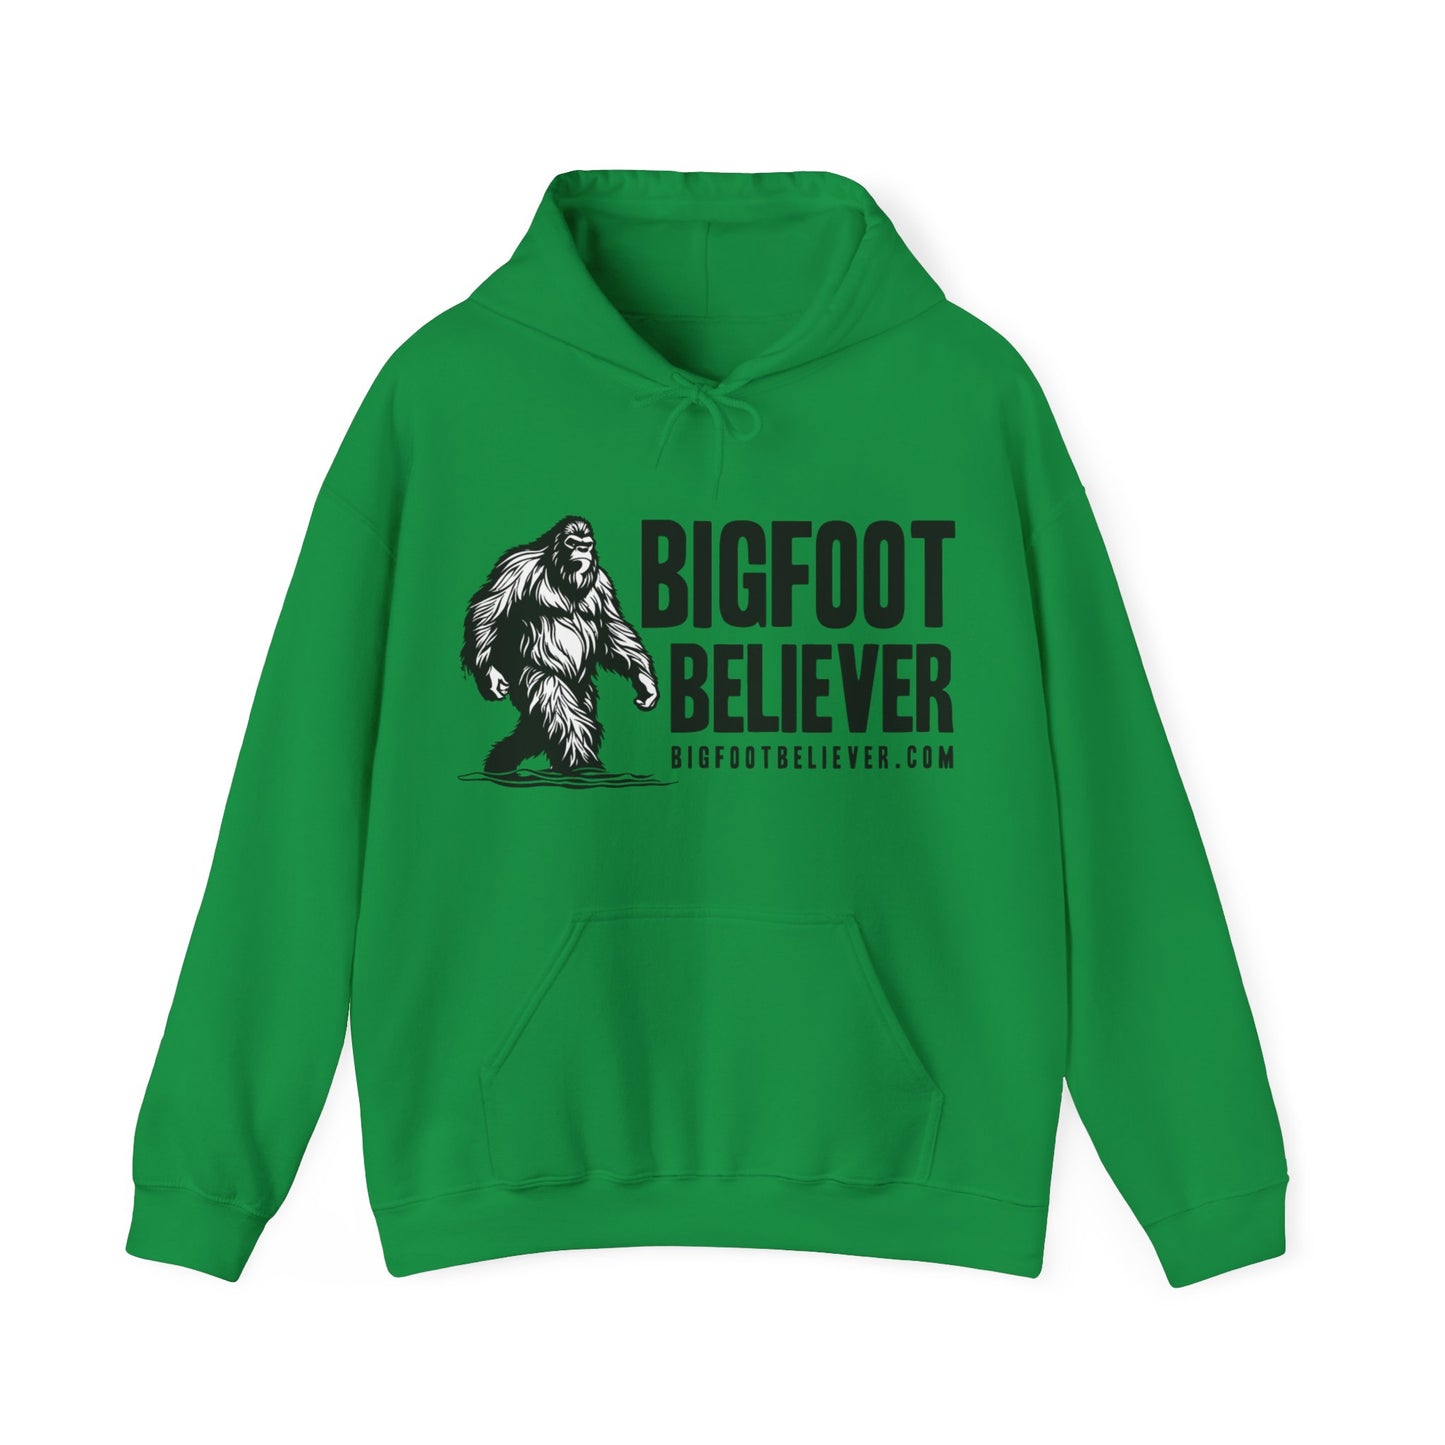 Bigfoot Believer. Unisex Adult Hooded Heavy Blend Sweatshirt